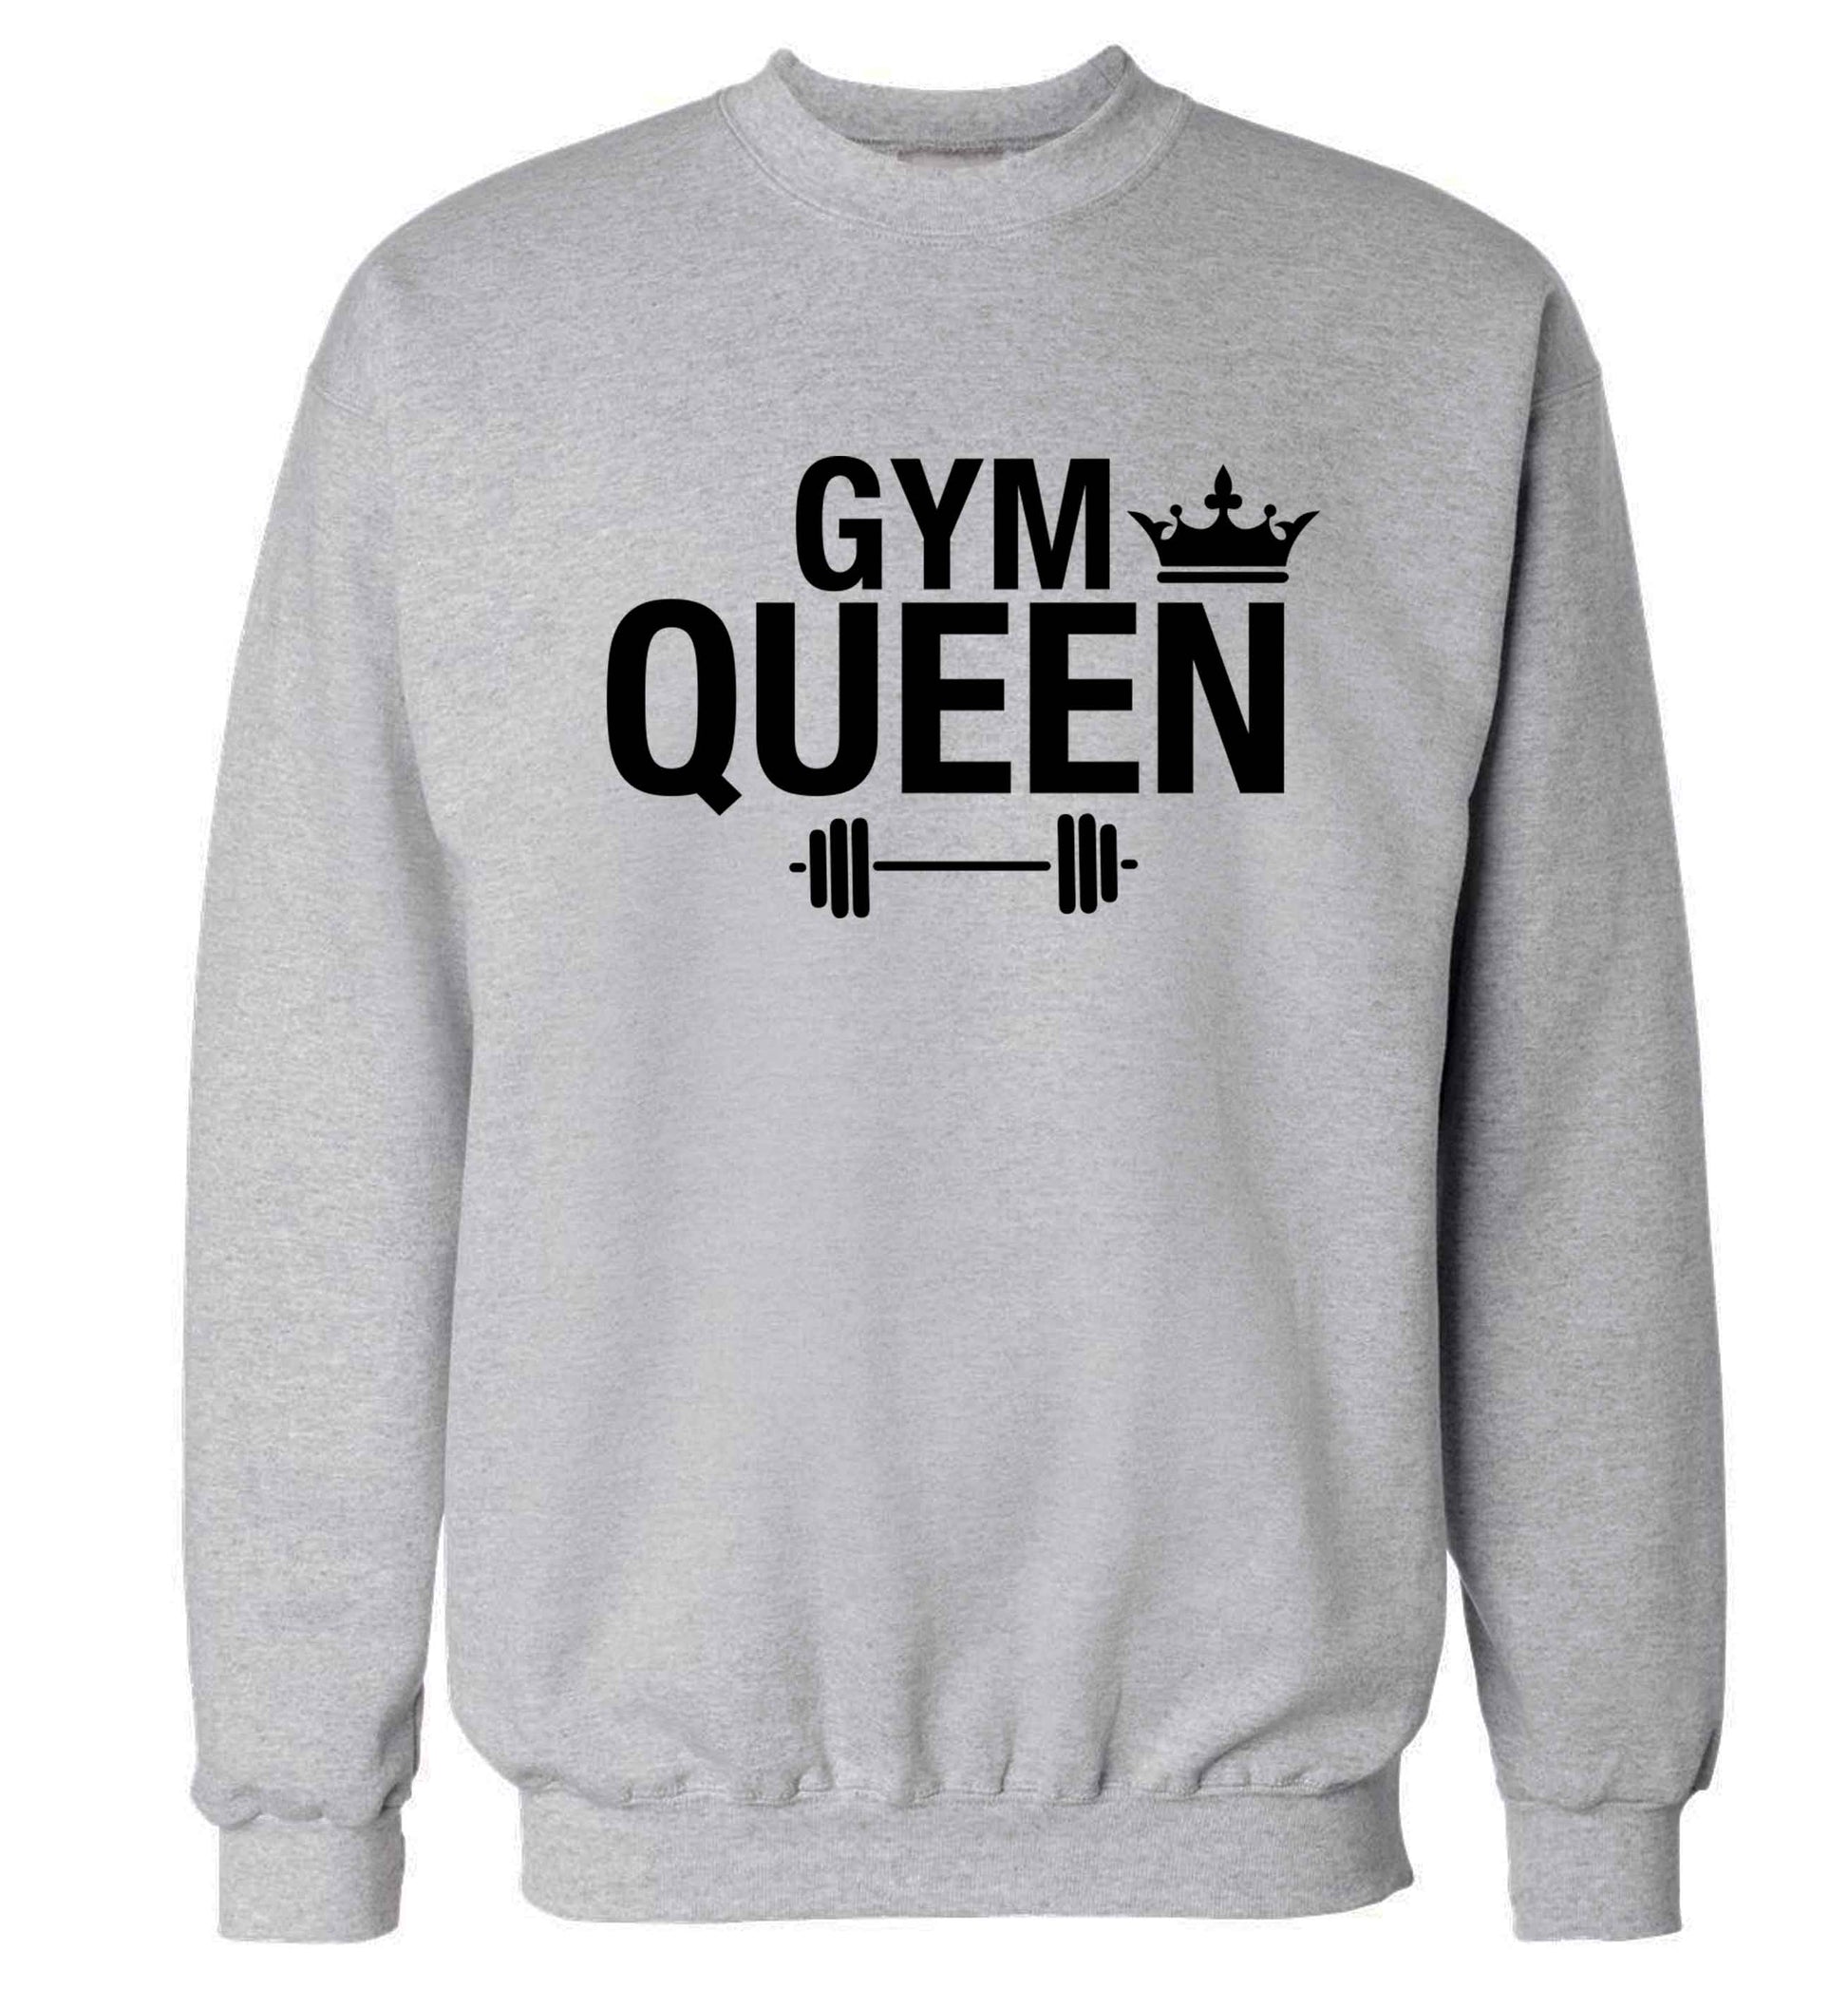 Gym queen Adult's unisex grey Sweater 2XL